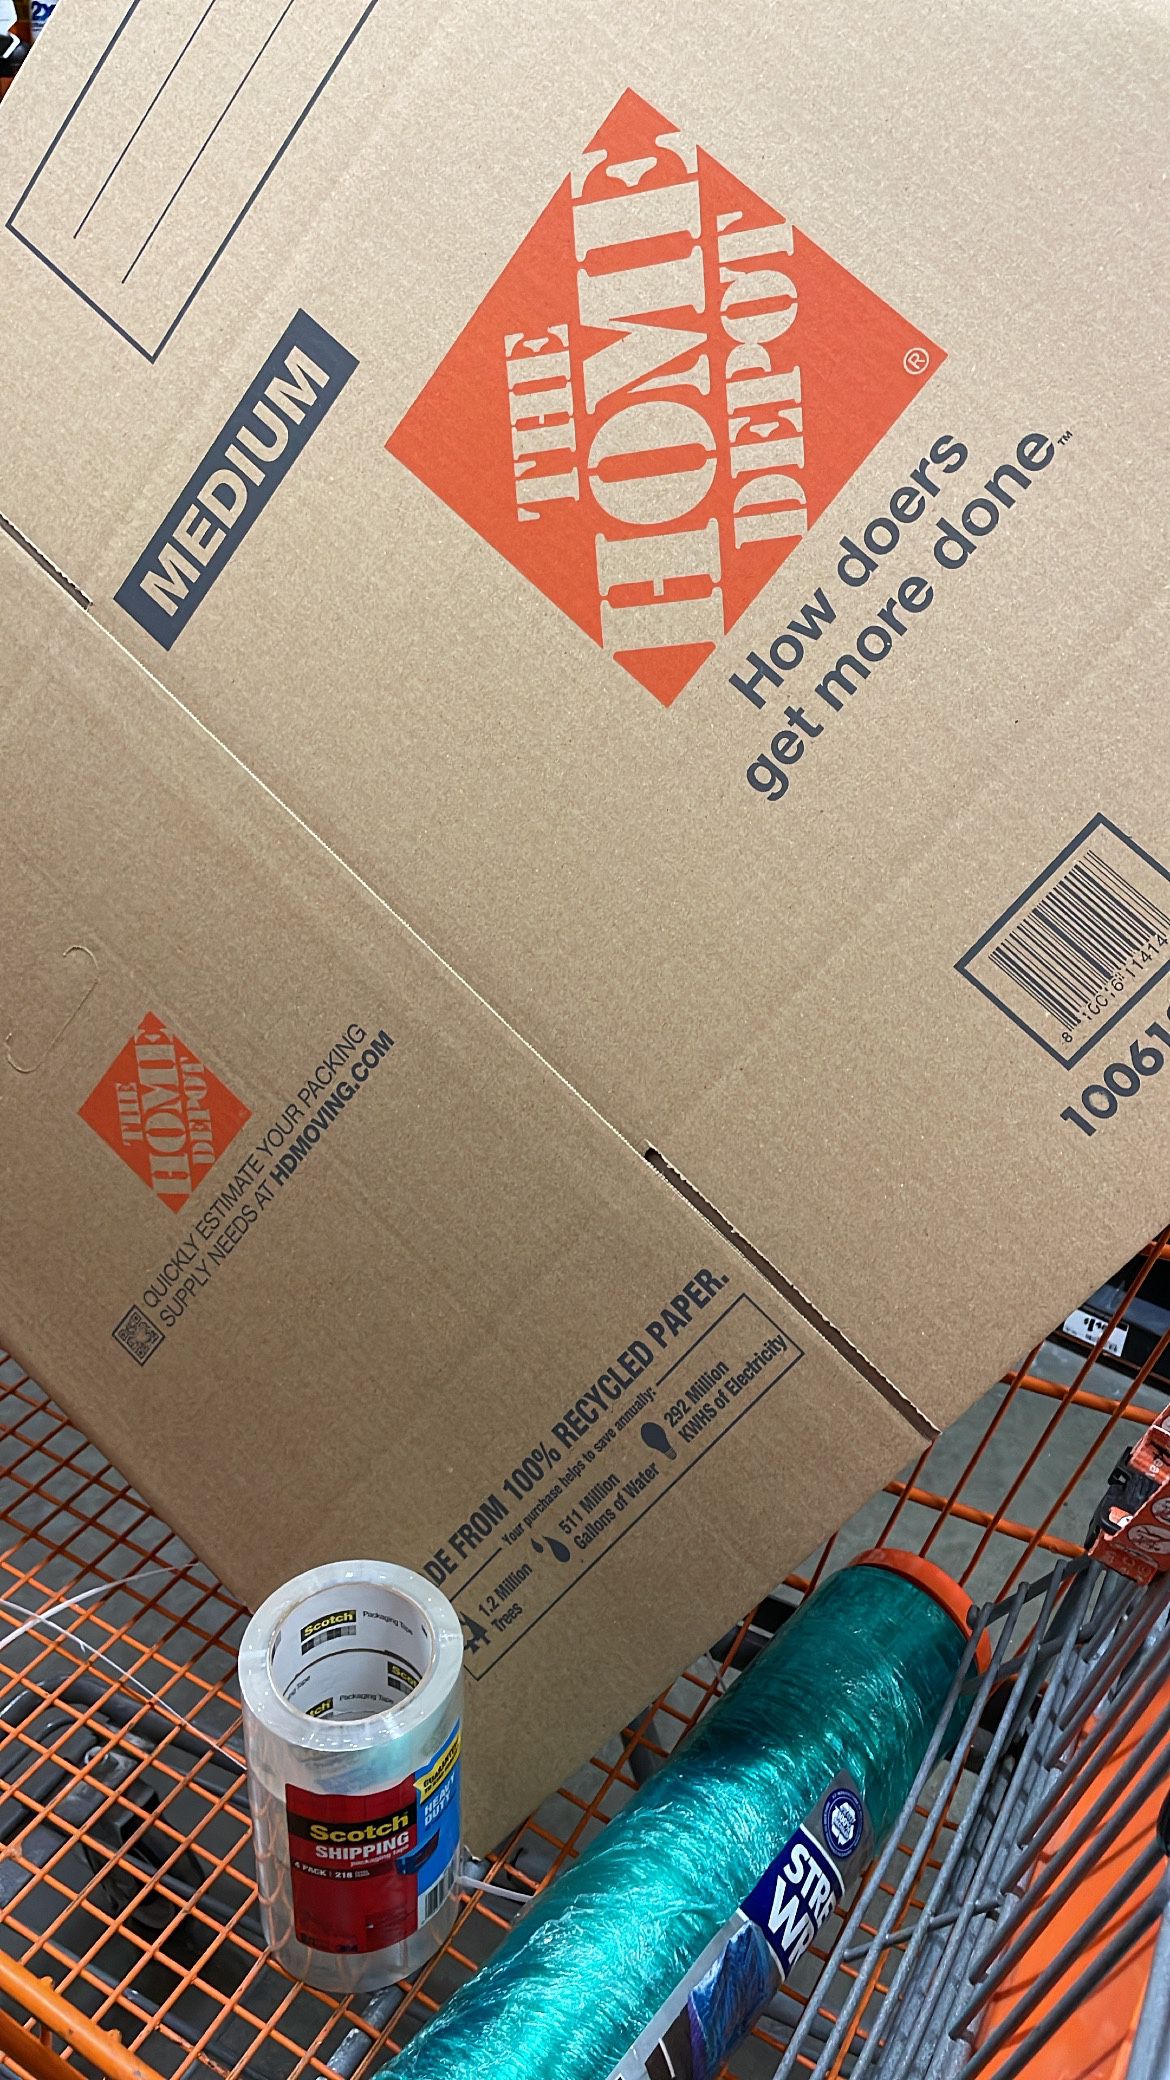 Needing Moving Boxes Please!